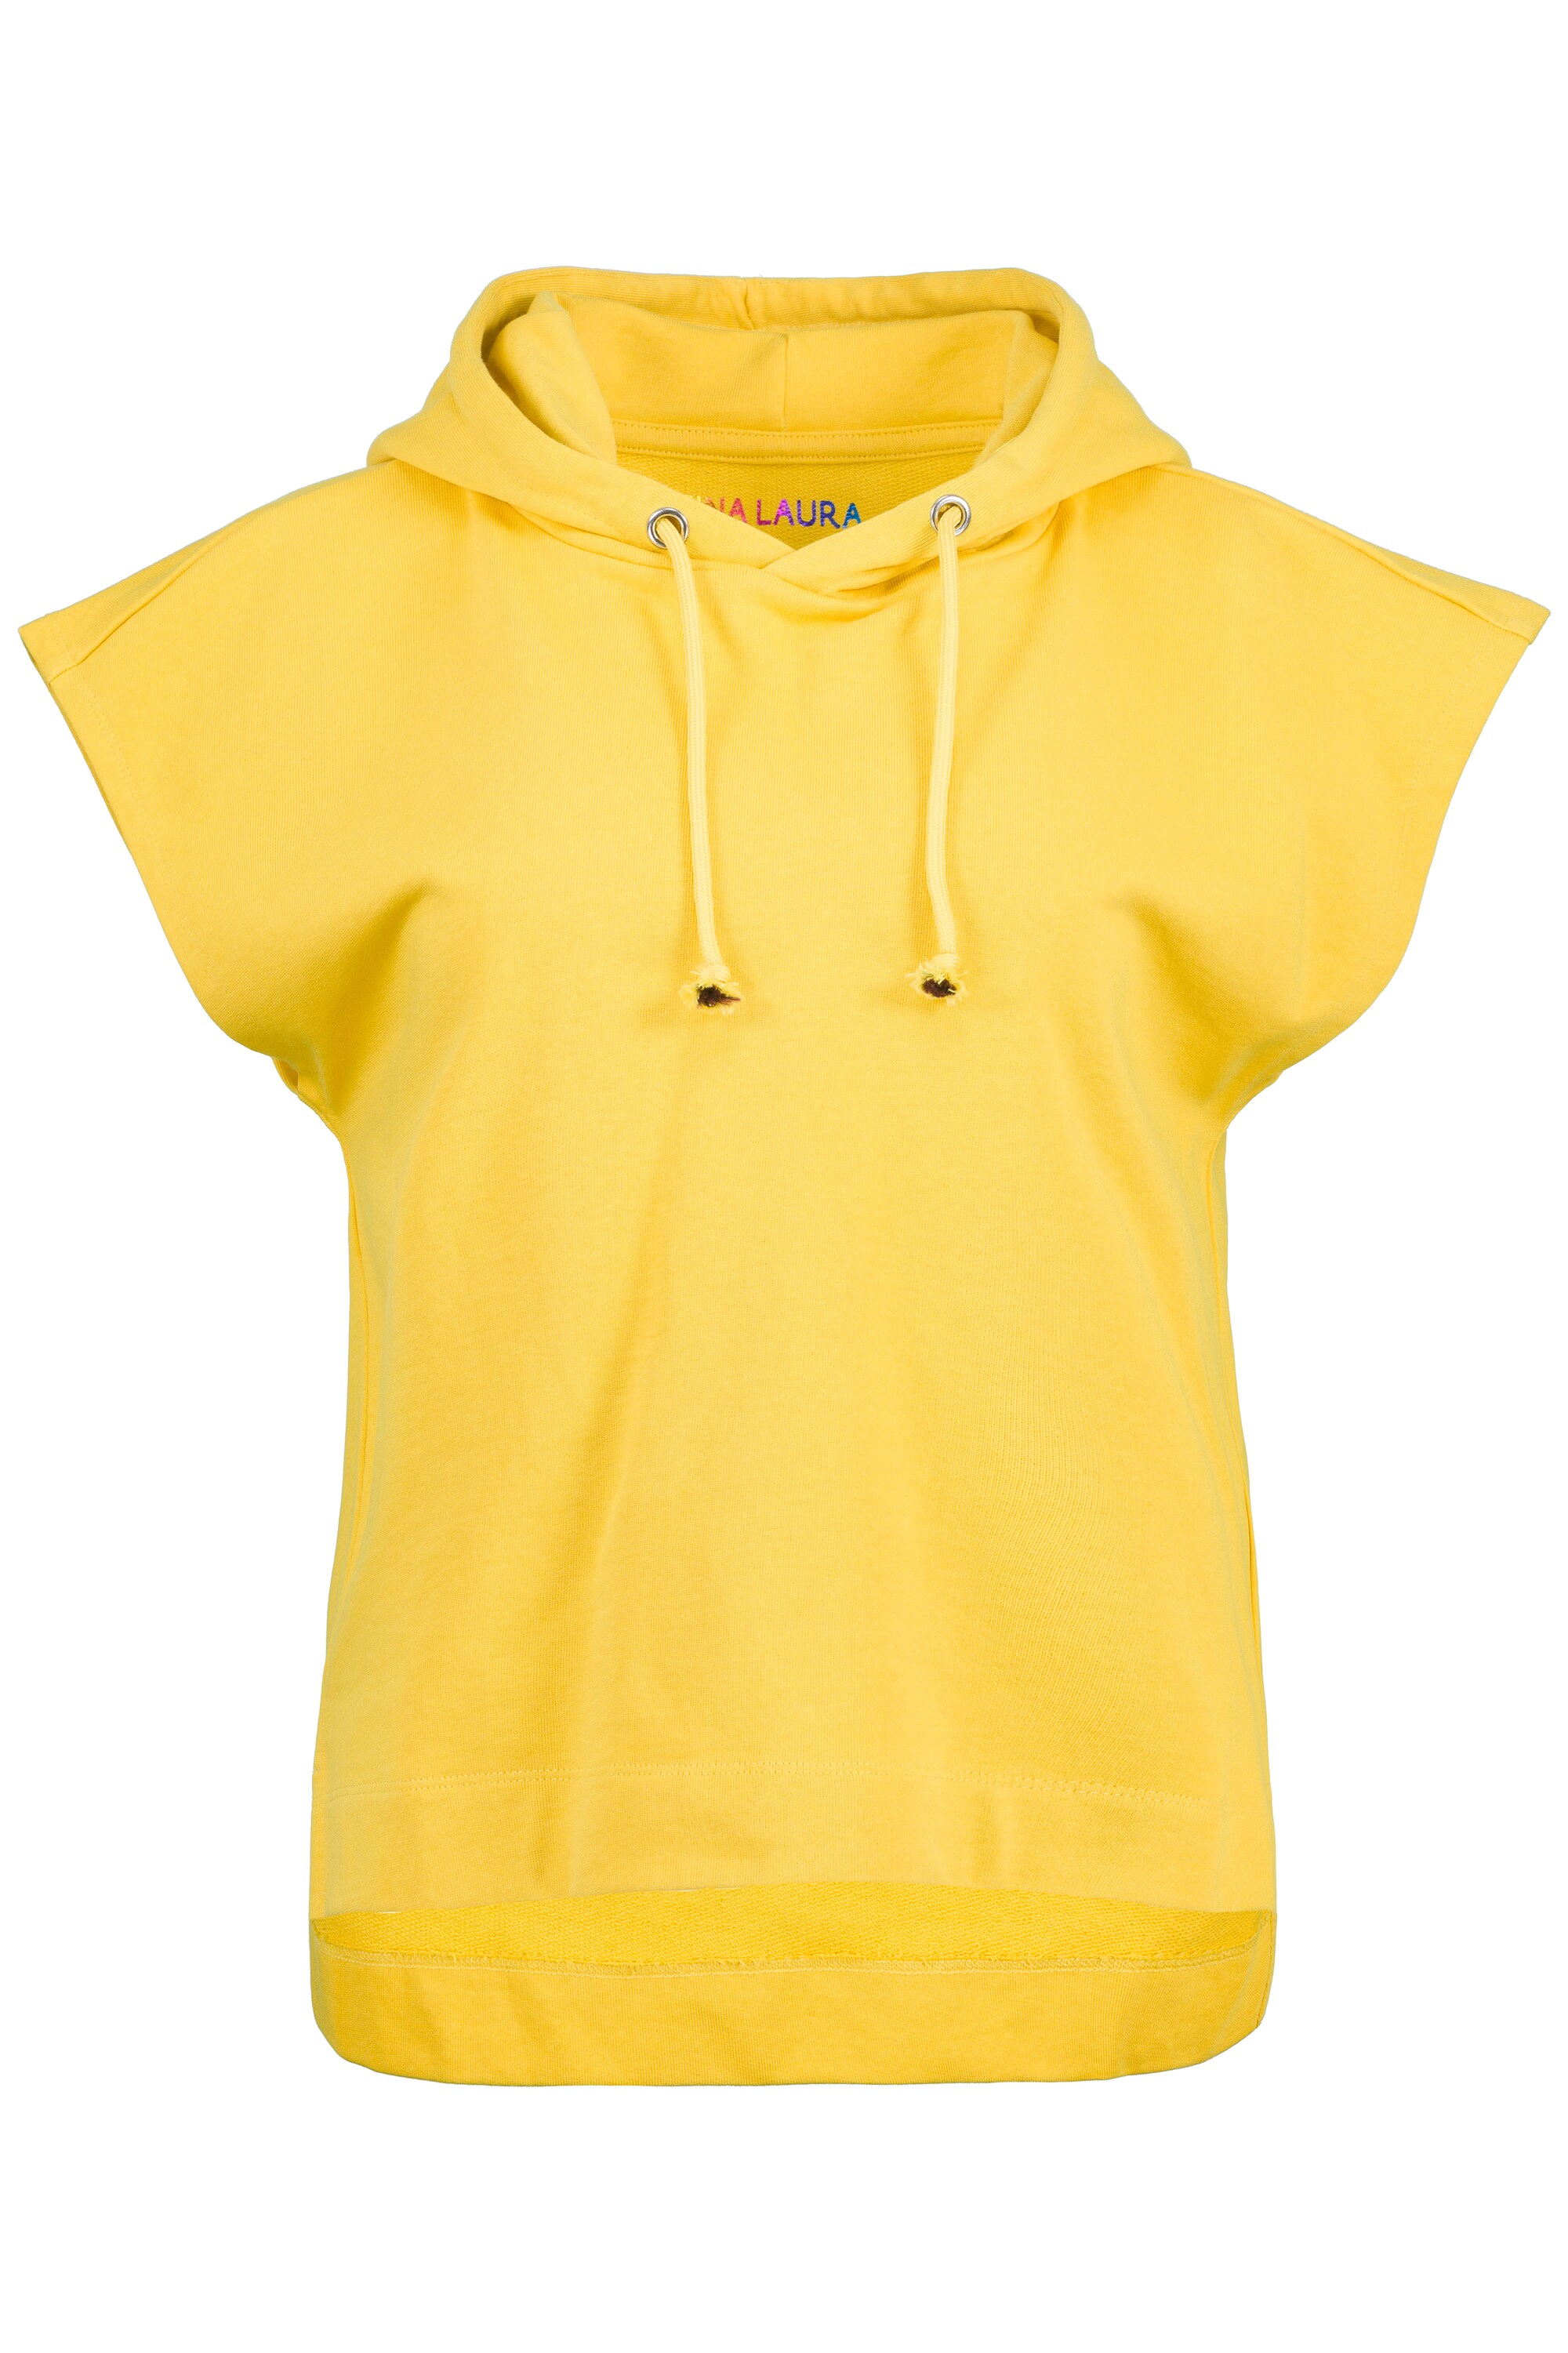 Толстовка Gina Laura Hoodie Shirt, цвет honig gelb